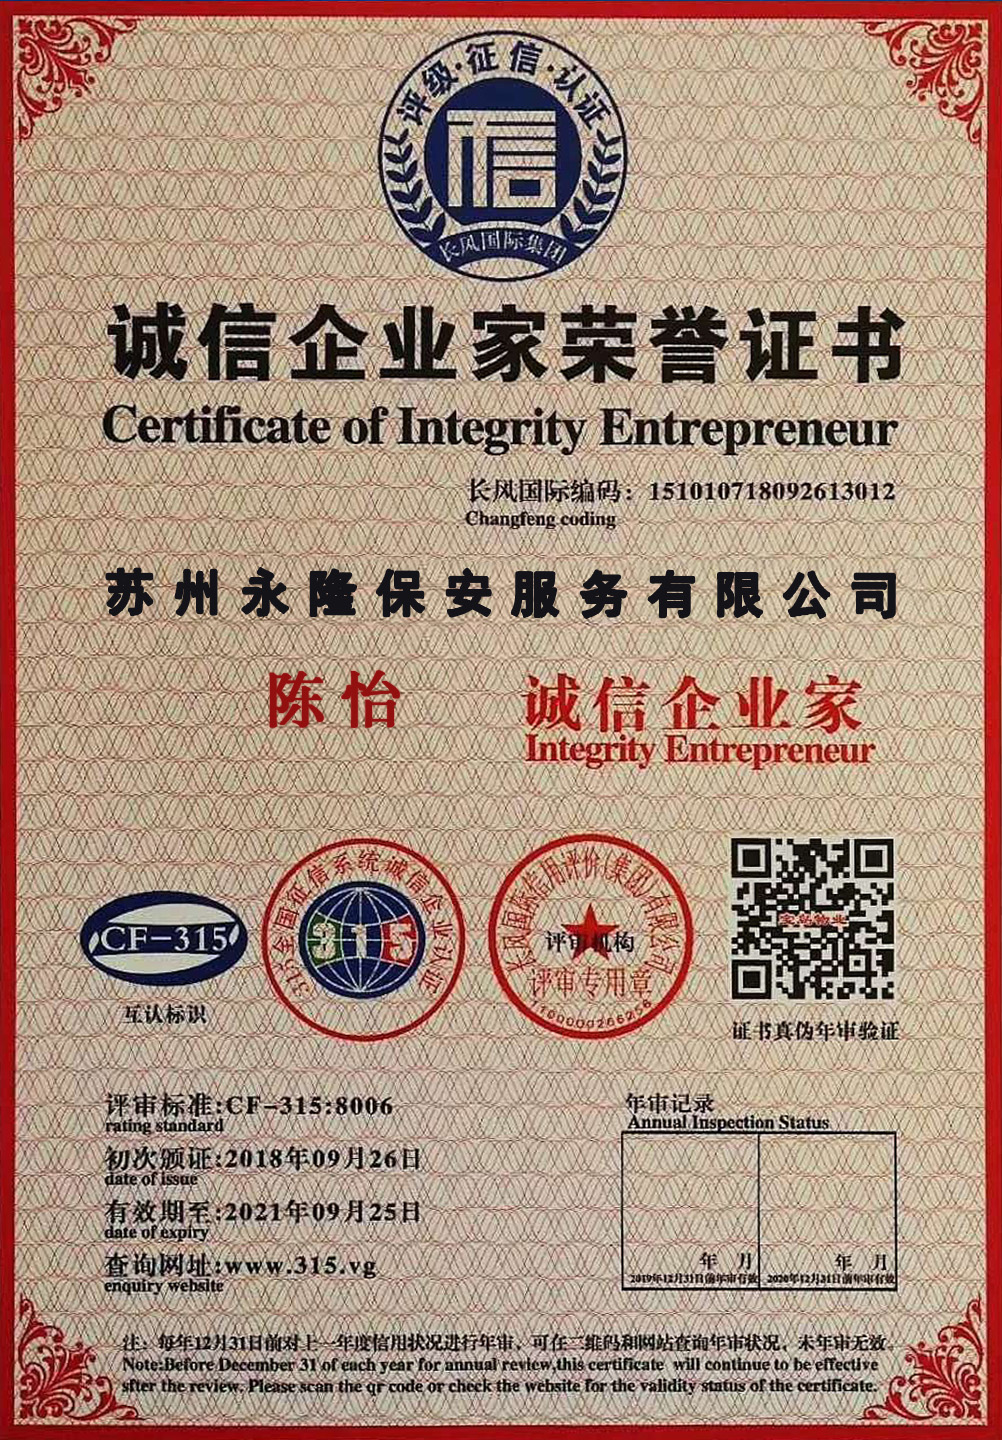 Certificate of Integrity Entrepreneur